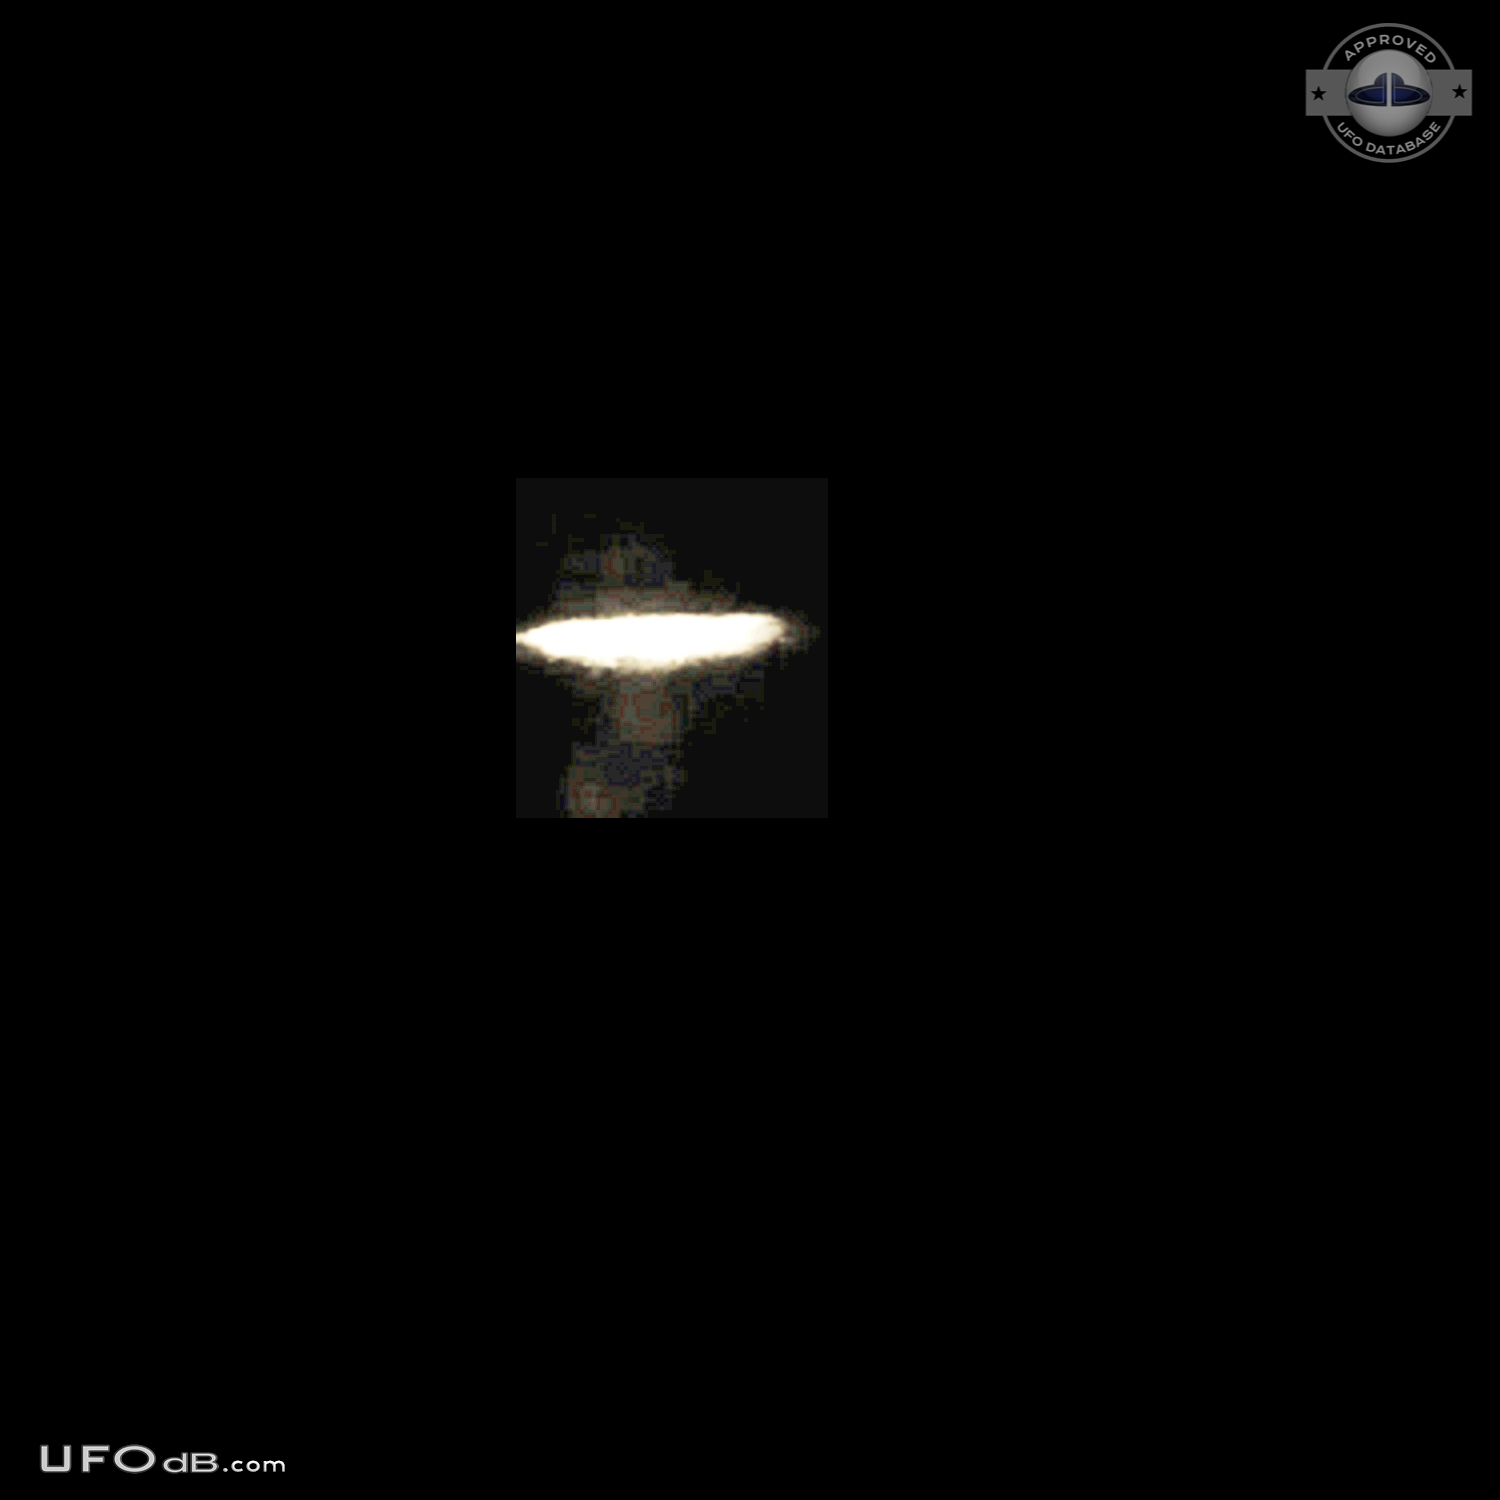 Explosive burst of light in sky with saucer UFO - Kingman Arizona 2012 UFO Picture #538-1